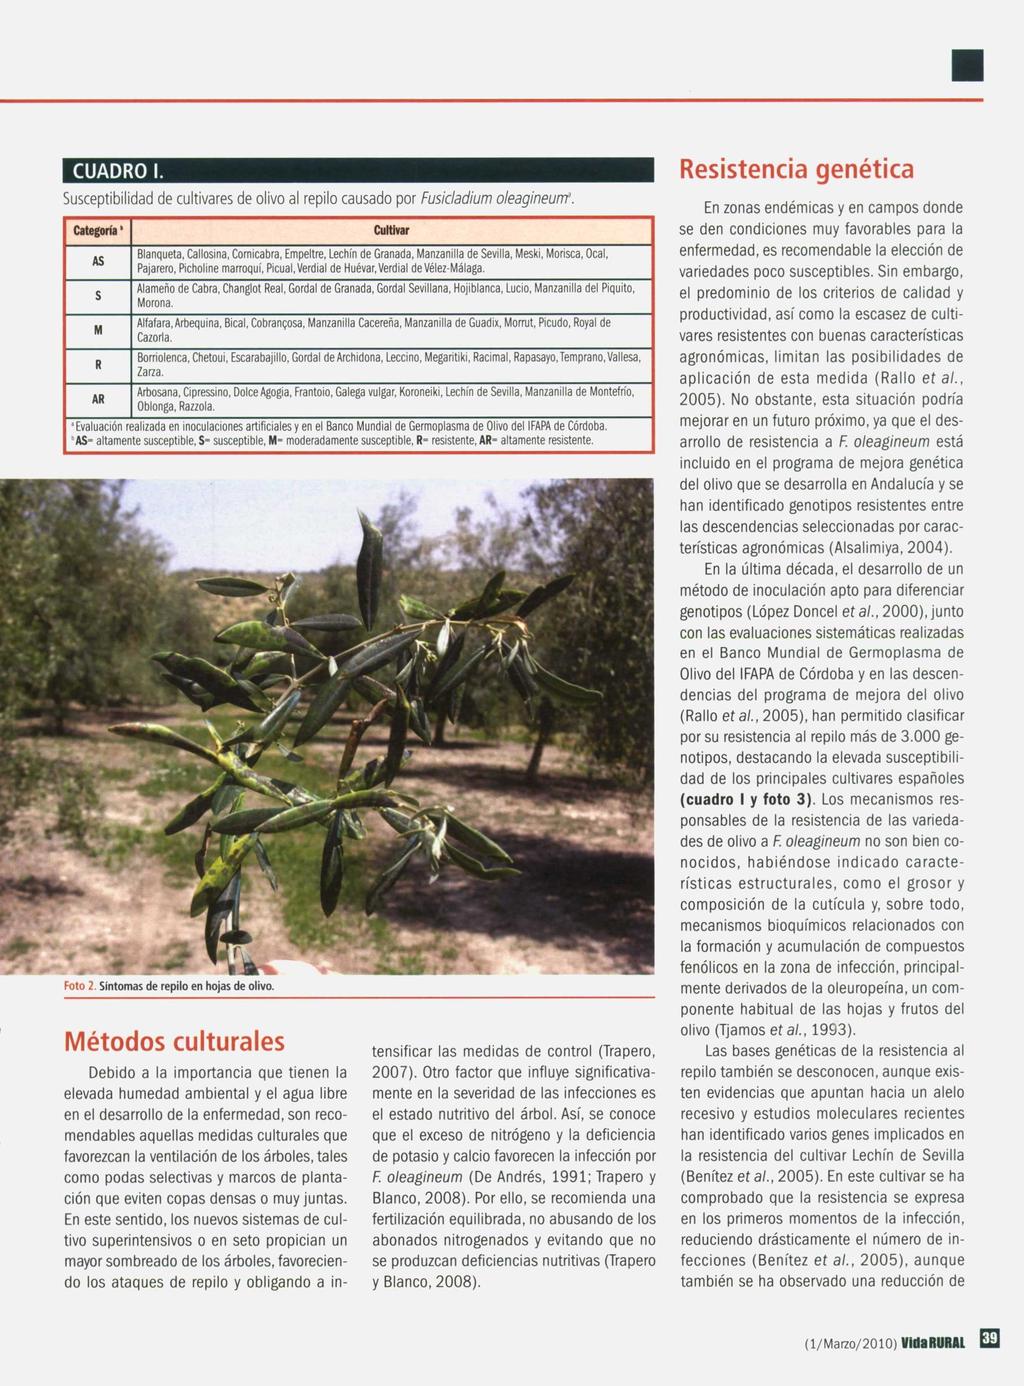 CUADRO 1. Susceptibilidad de cultivares de olivo al repilo causado por Fusicladium oleagineunr.